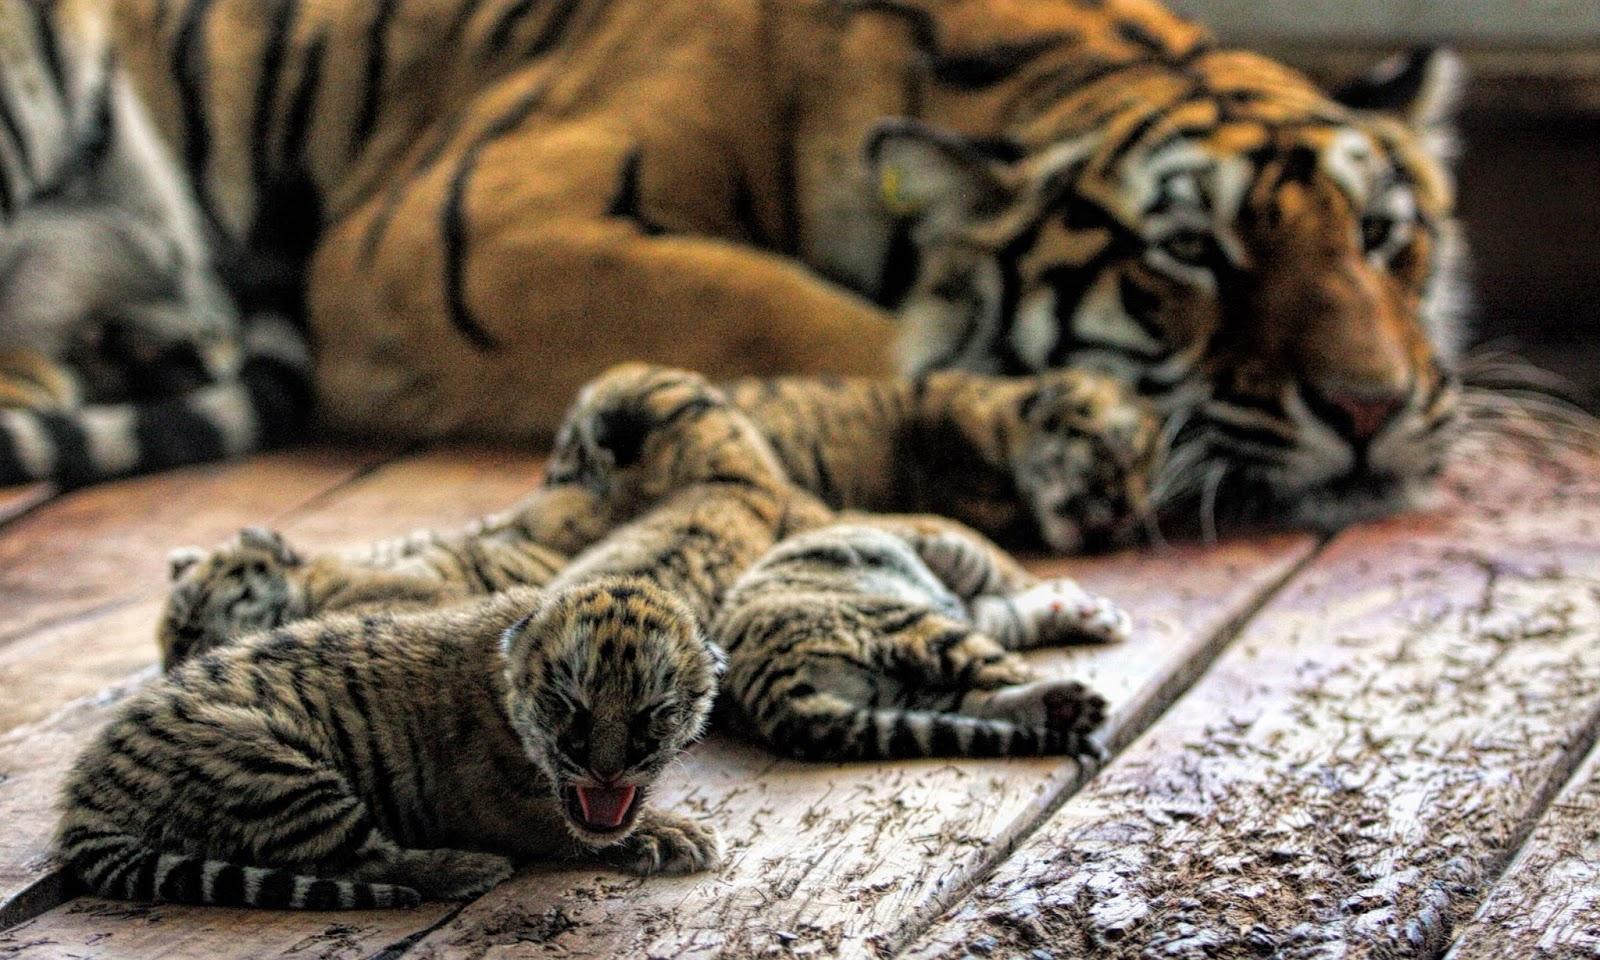 Tiger Cubs Wallpapers